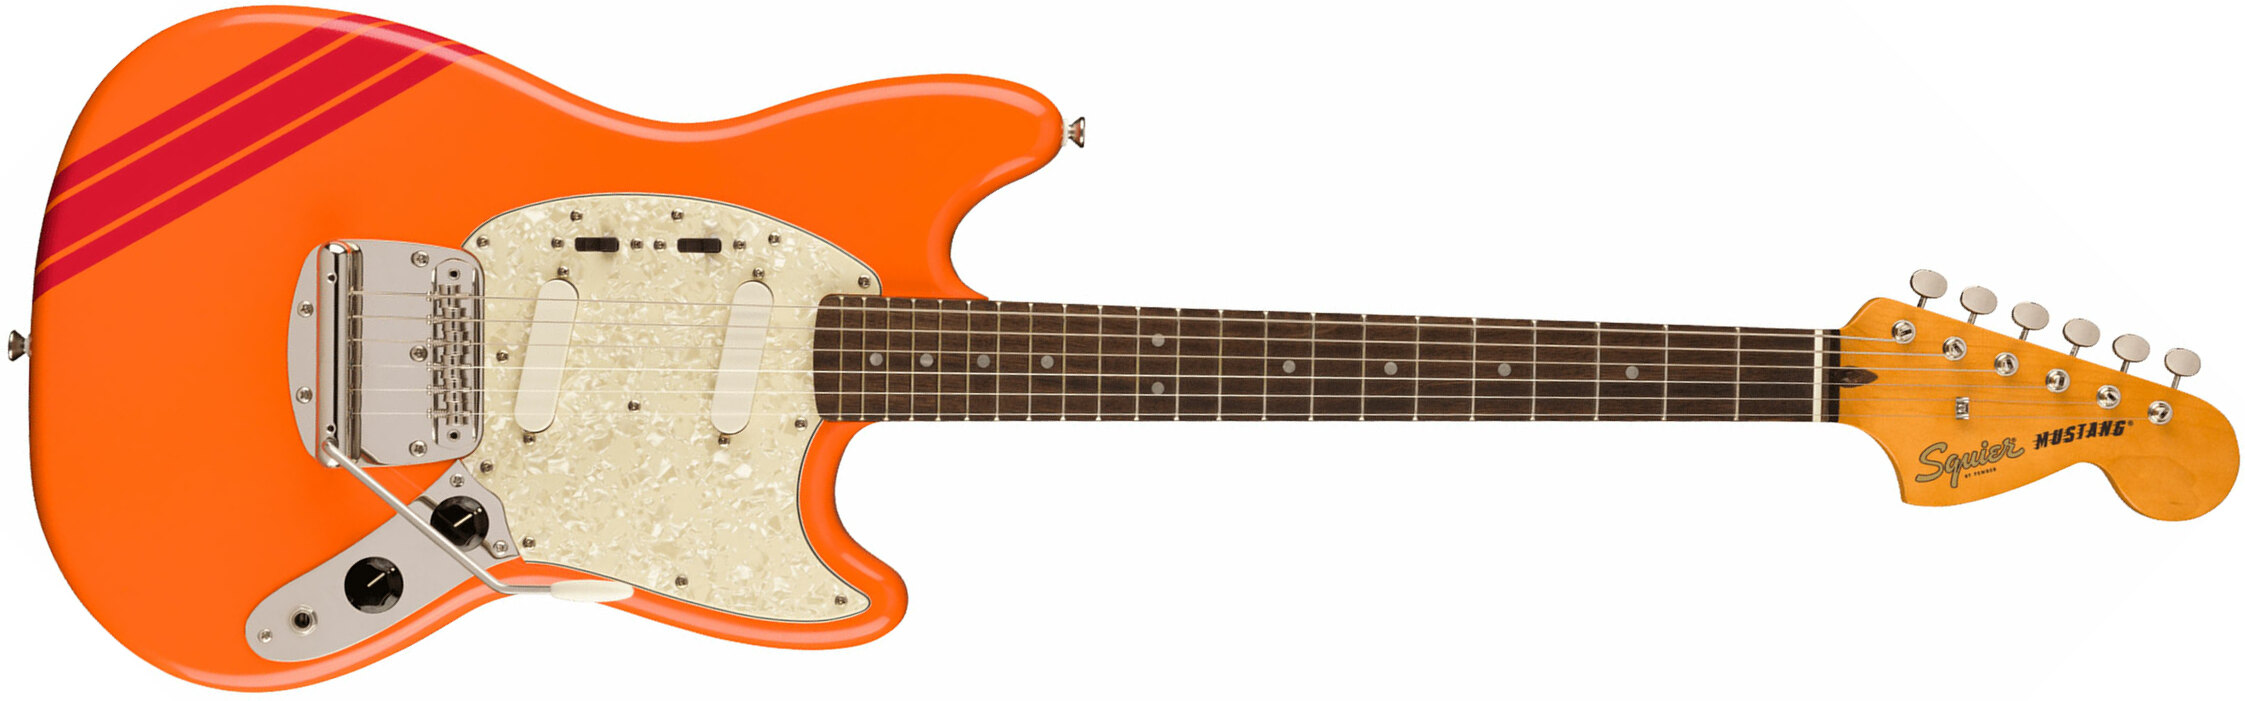 Squier Mustang  Classic Vibe 60s Competition Fsr Ltd Lau - Capri Orange W/ Dakota Red Stripes - Str shape electric guitar - Main picture